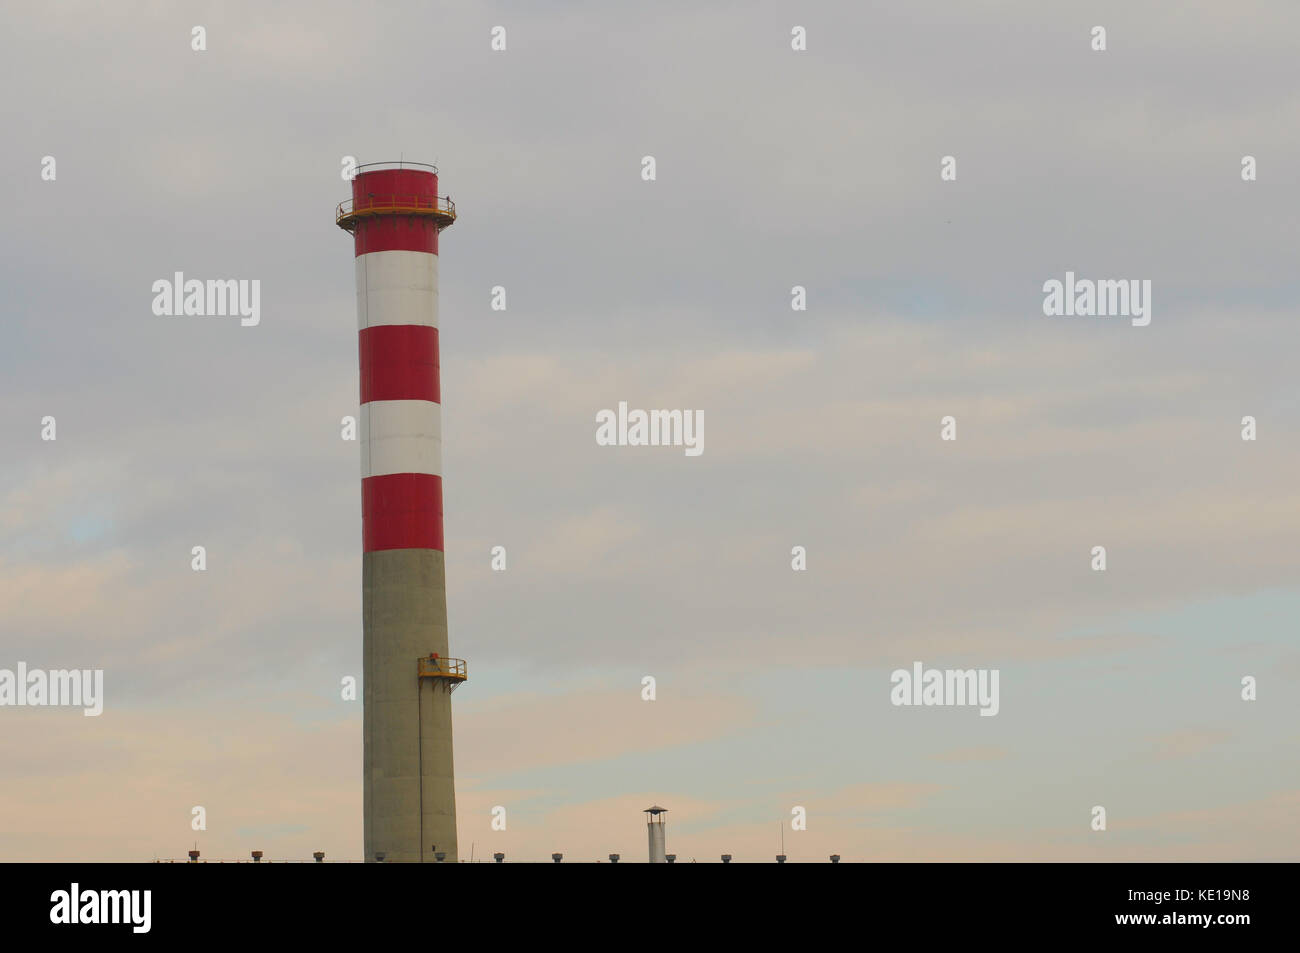 Factory chimney in the sky horizontal photo Stock Photo